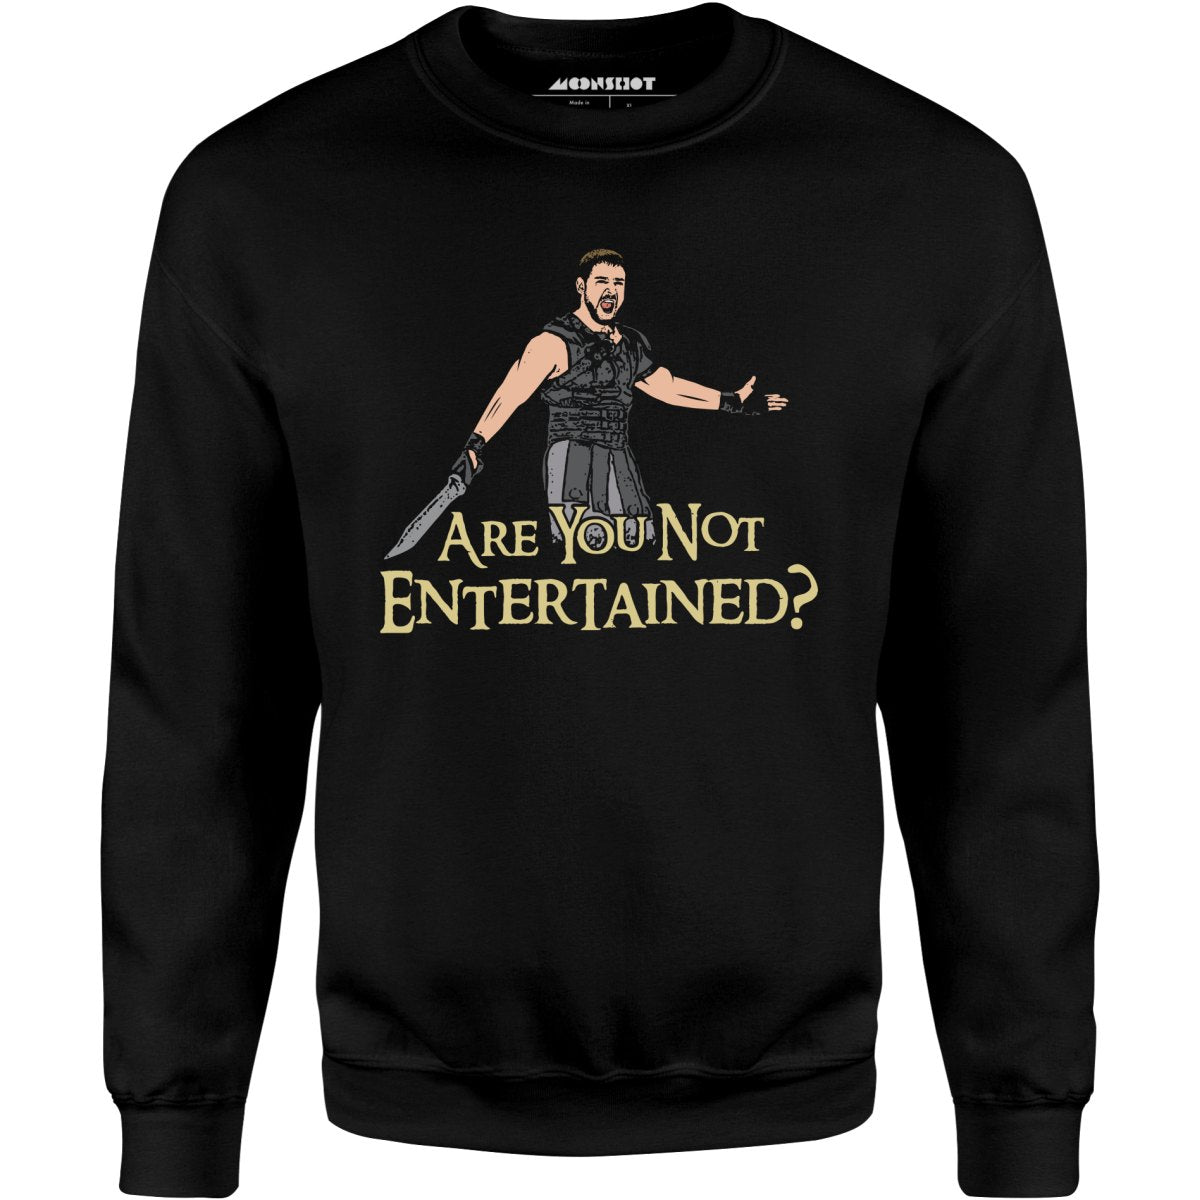 Are You Not Entertained? - Unisex Sweatshirt